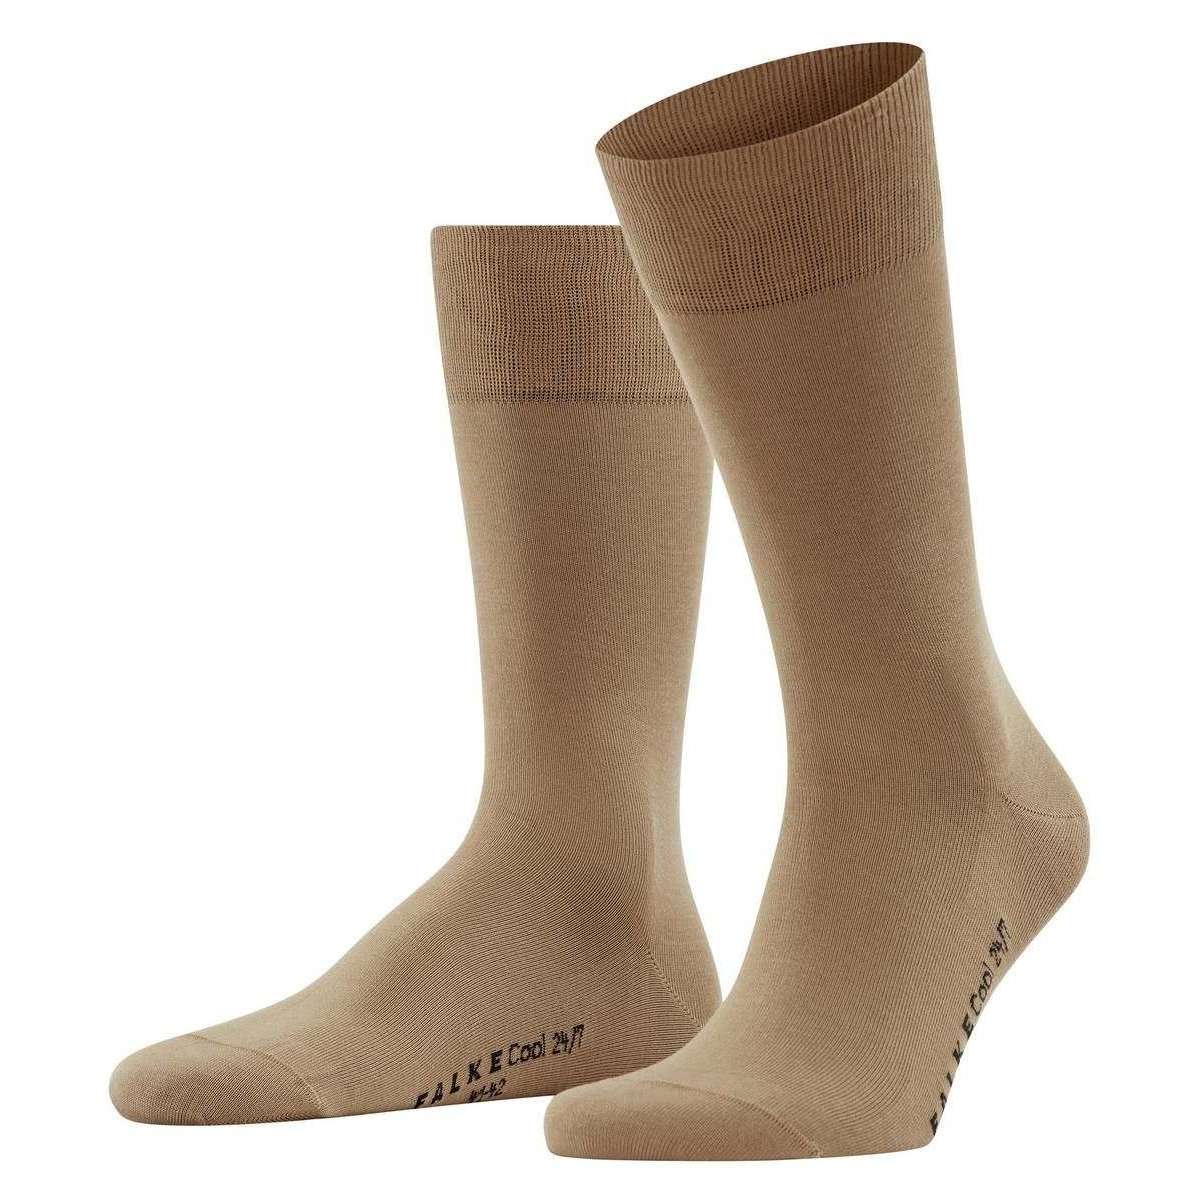 Falke Cool 24/7 Socks - Vulcano Grey - Extra Small - 5.5-6.5 UK | 6.5-7.5 US | 39-40 EUR